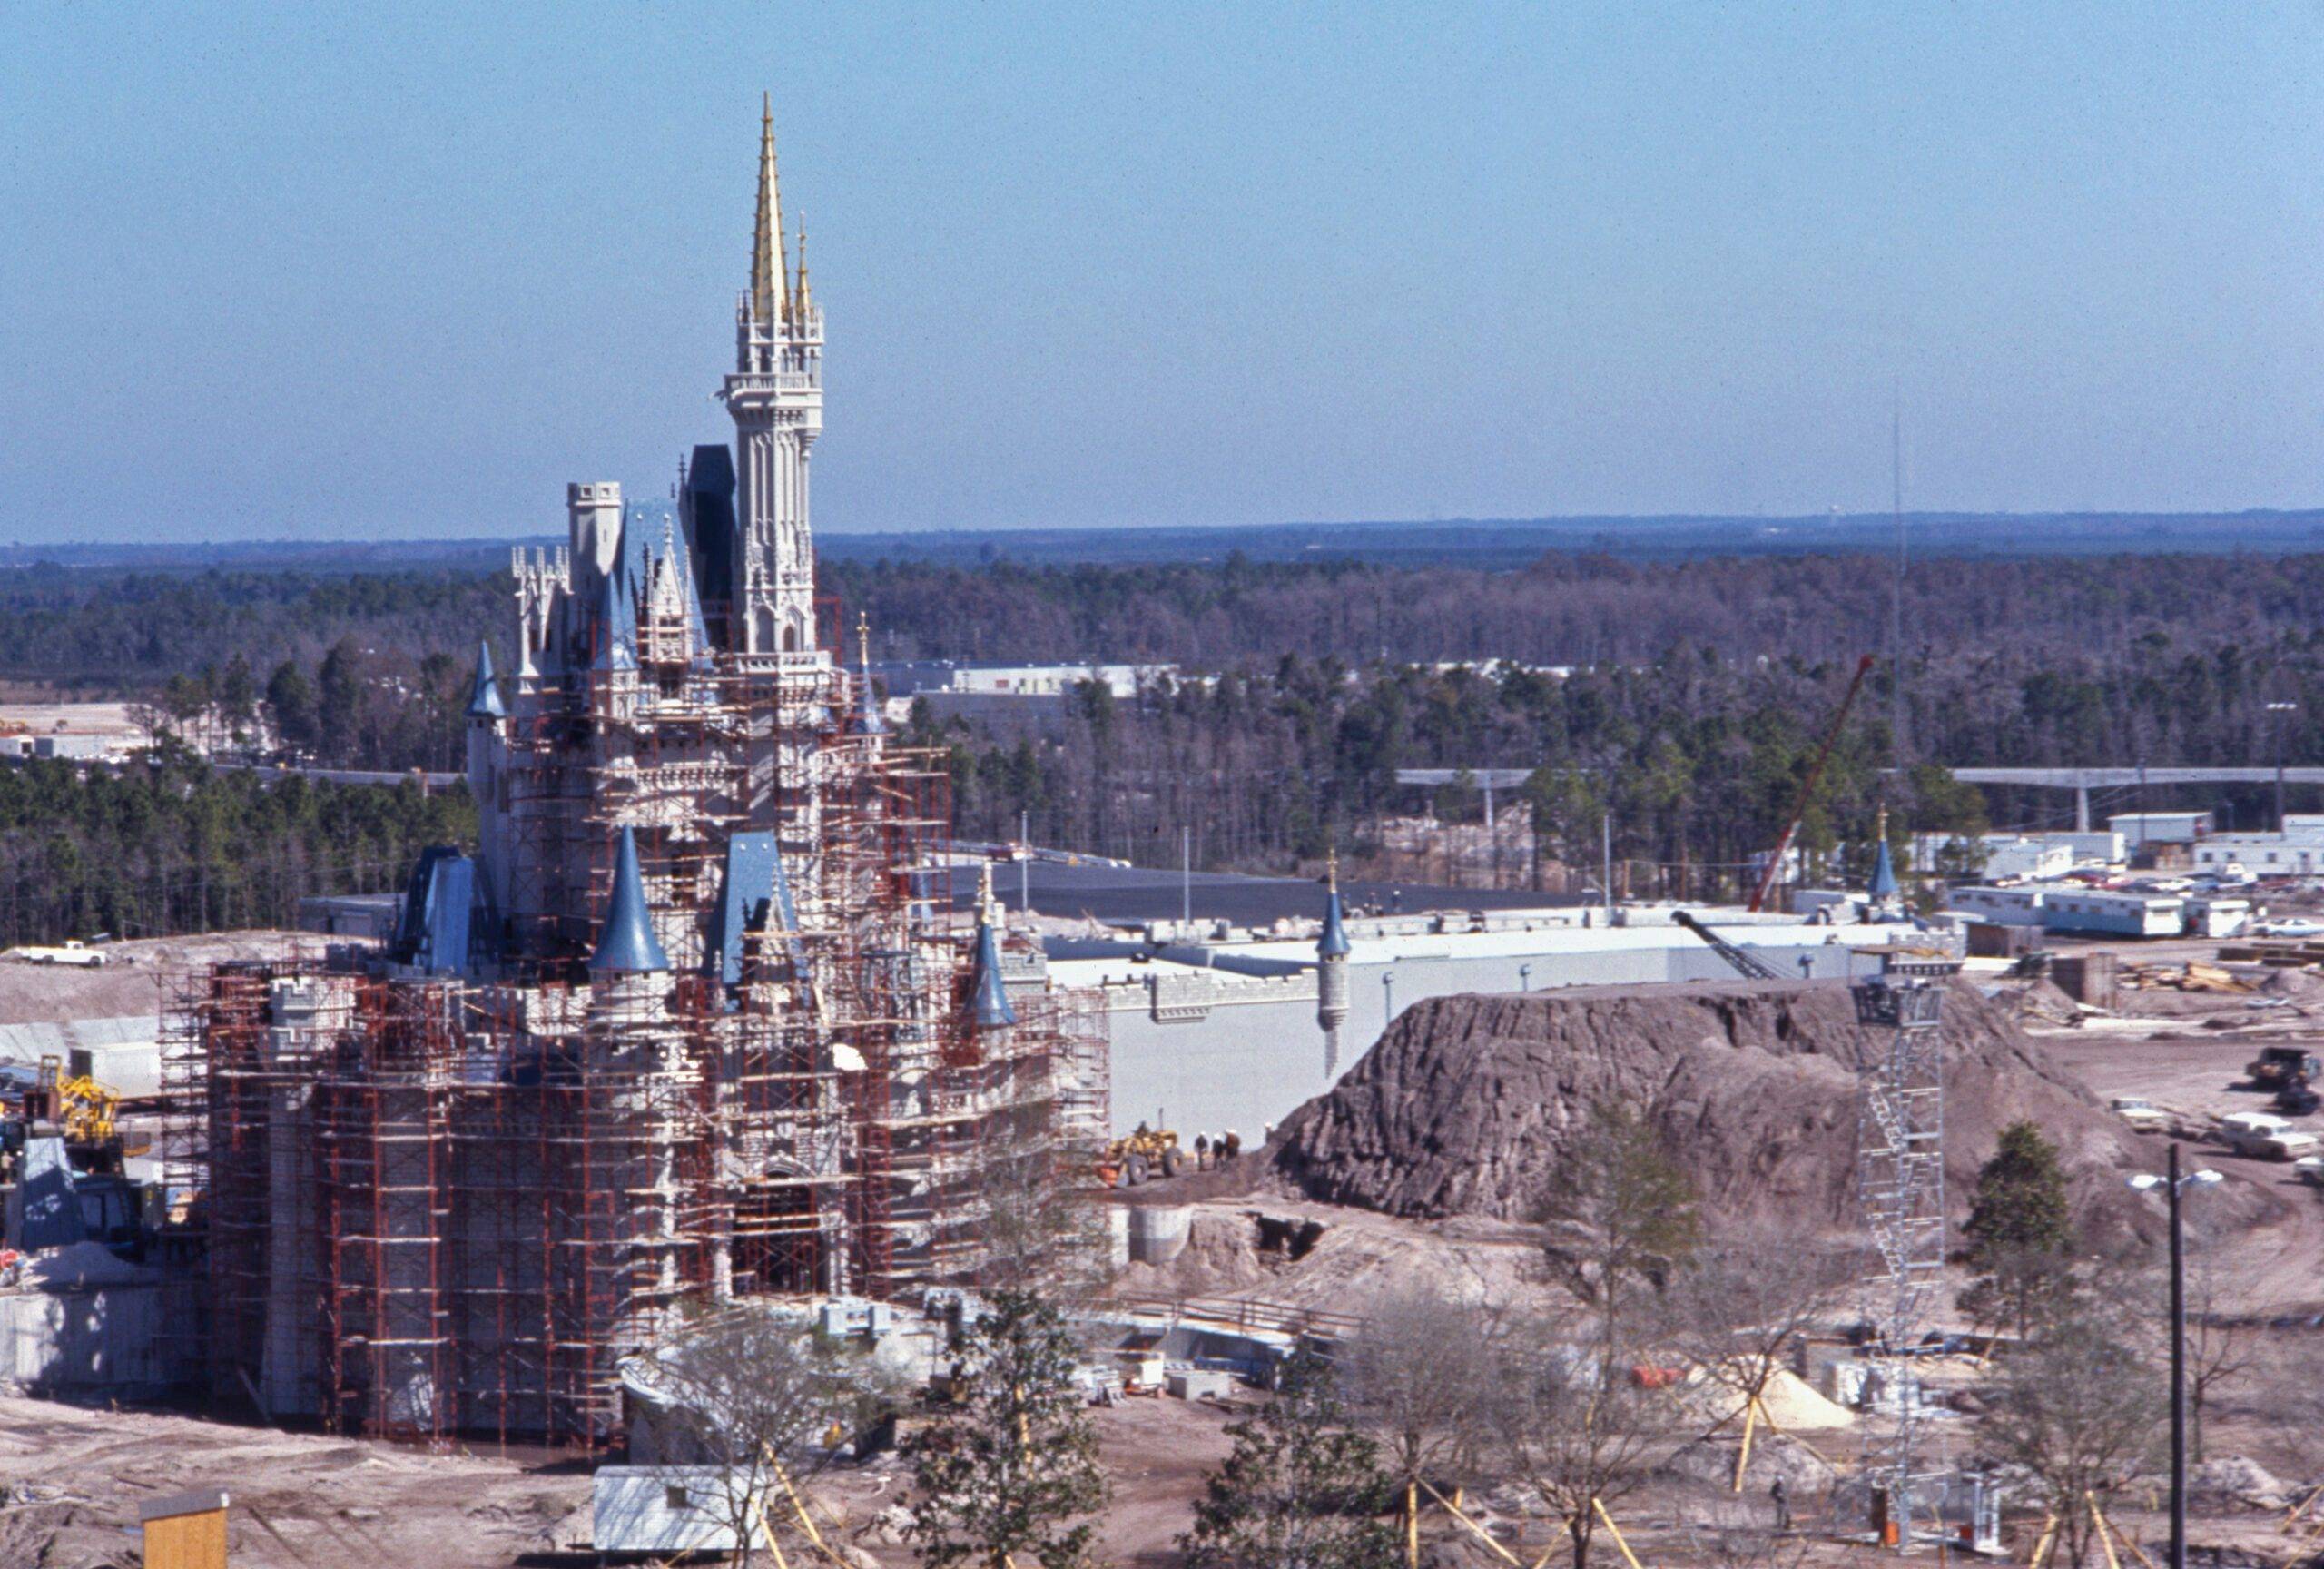 Cinderella Castle under construction at Magic Kingdom Park in 1971 at Walt Disney World Resort